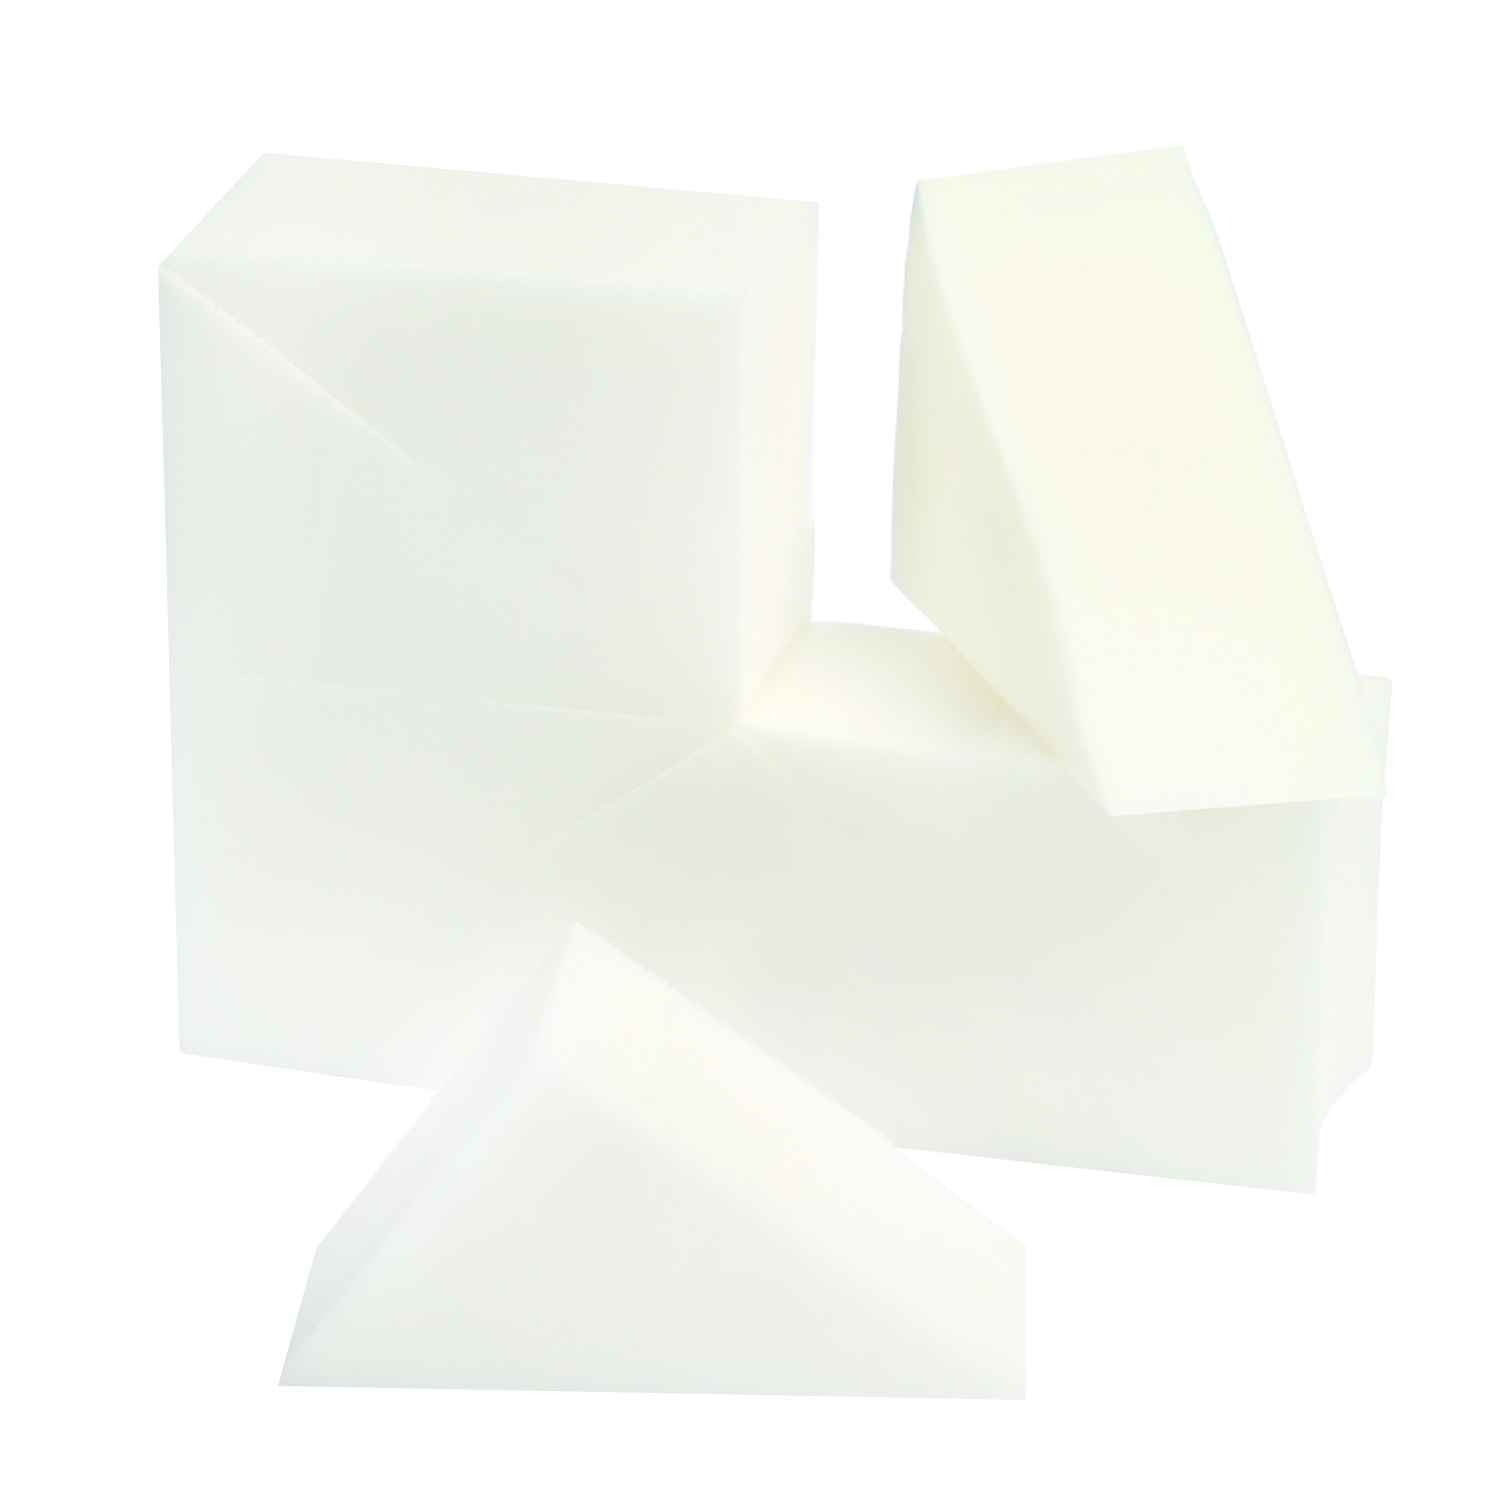 Wedged Sponge Block (8 pcs) - White